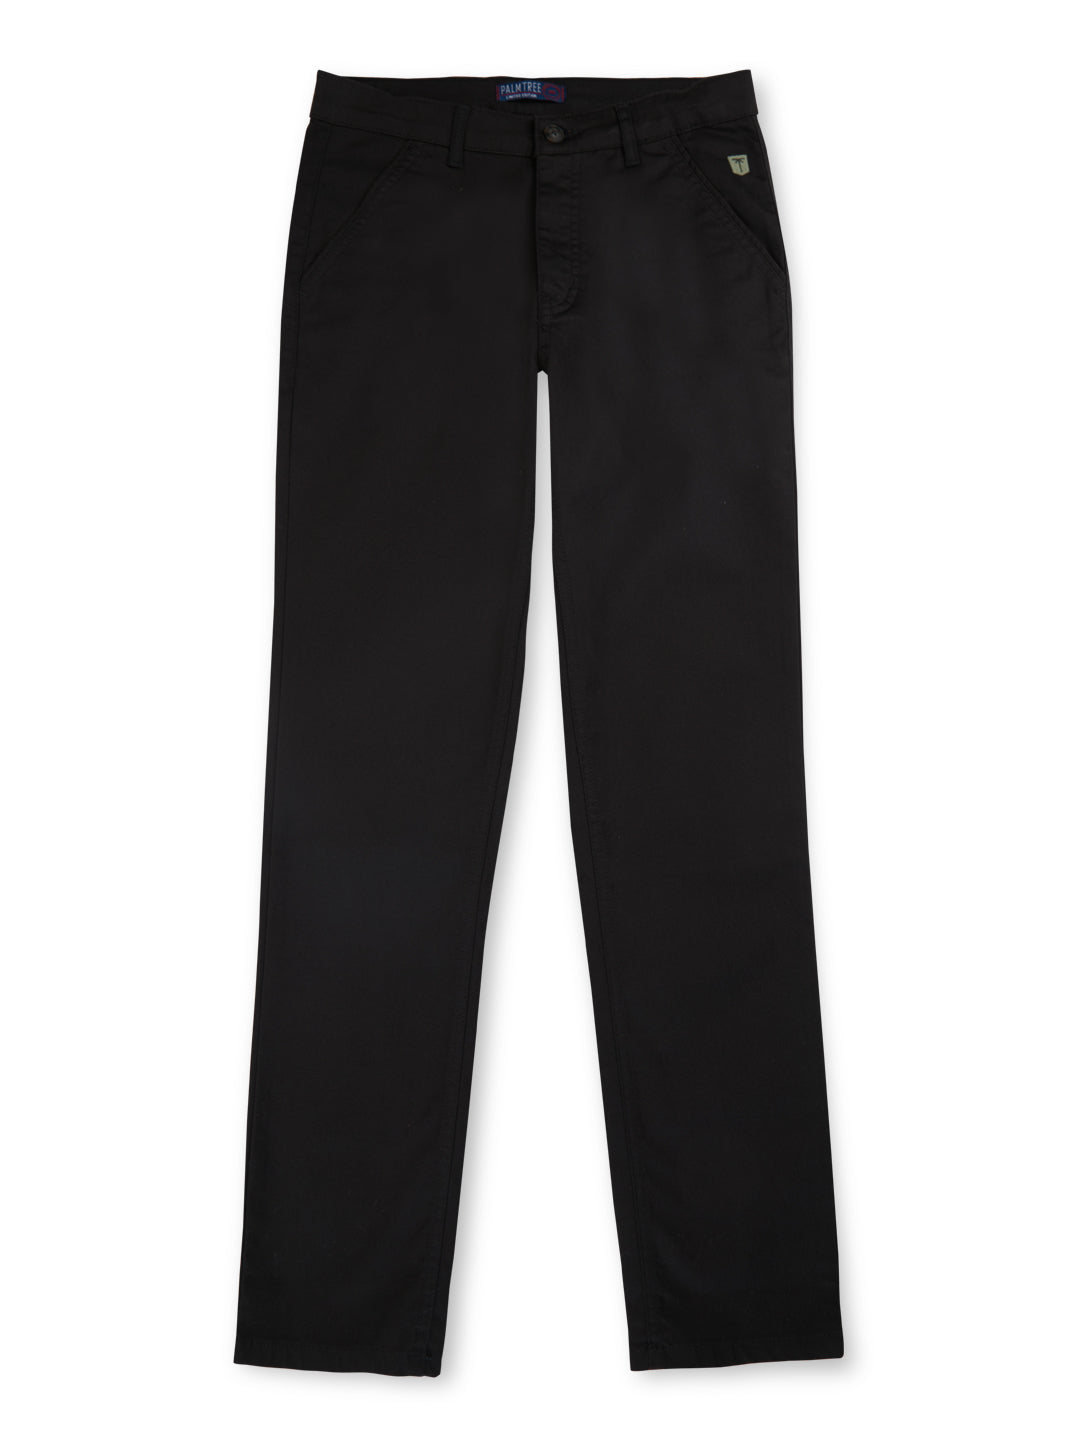 Boys Black Solid Cotton Elasticated Trouser